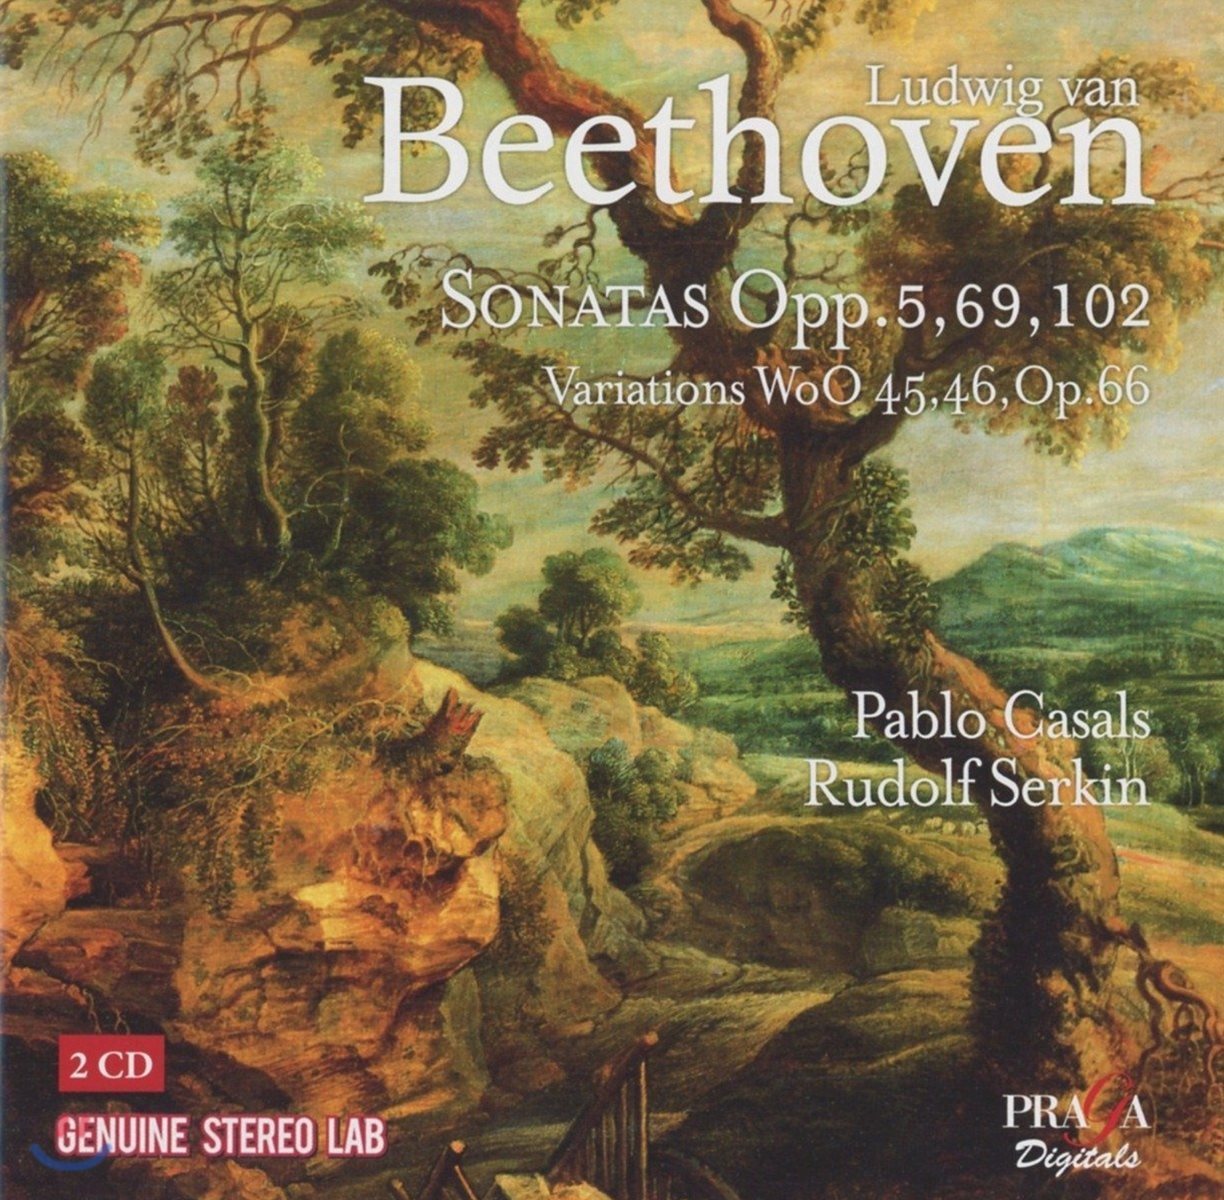 Pablo Casals / Rudolf Serkin 베토벤: 첼로 소나타, 변주곡 (Beethoven: Cello Sonatas Opp.5, 69 & 102, Variations WoO.45, 46, Op.66)